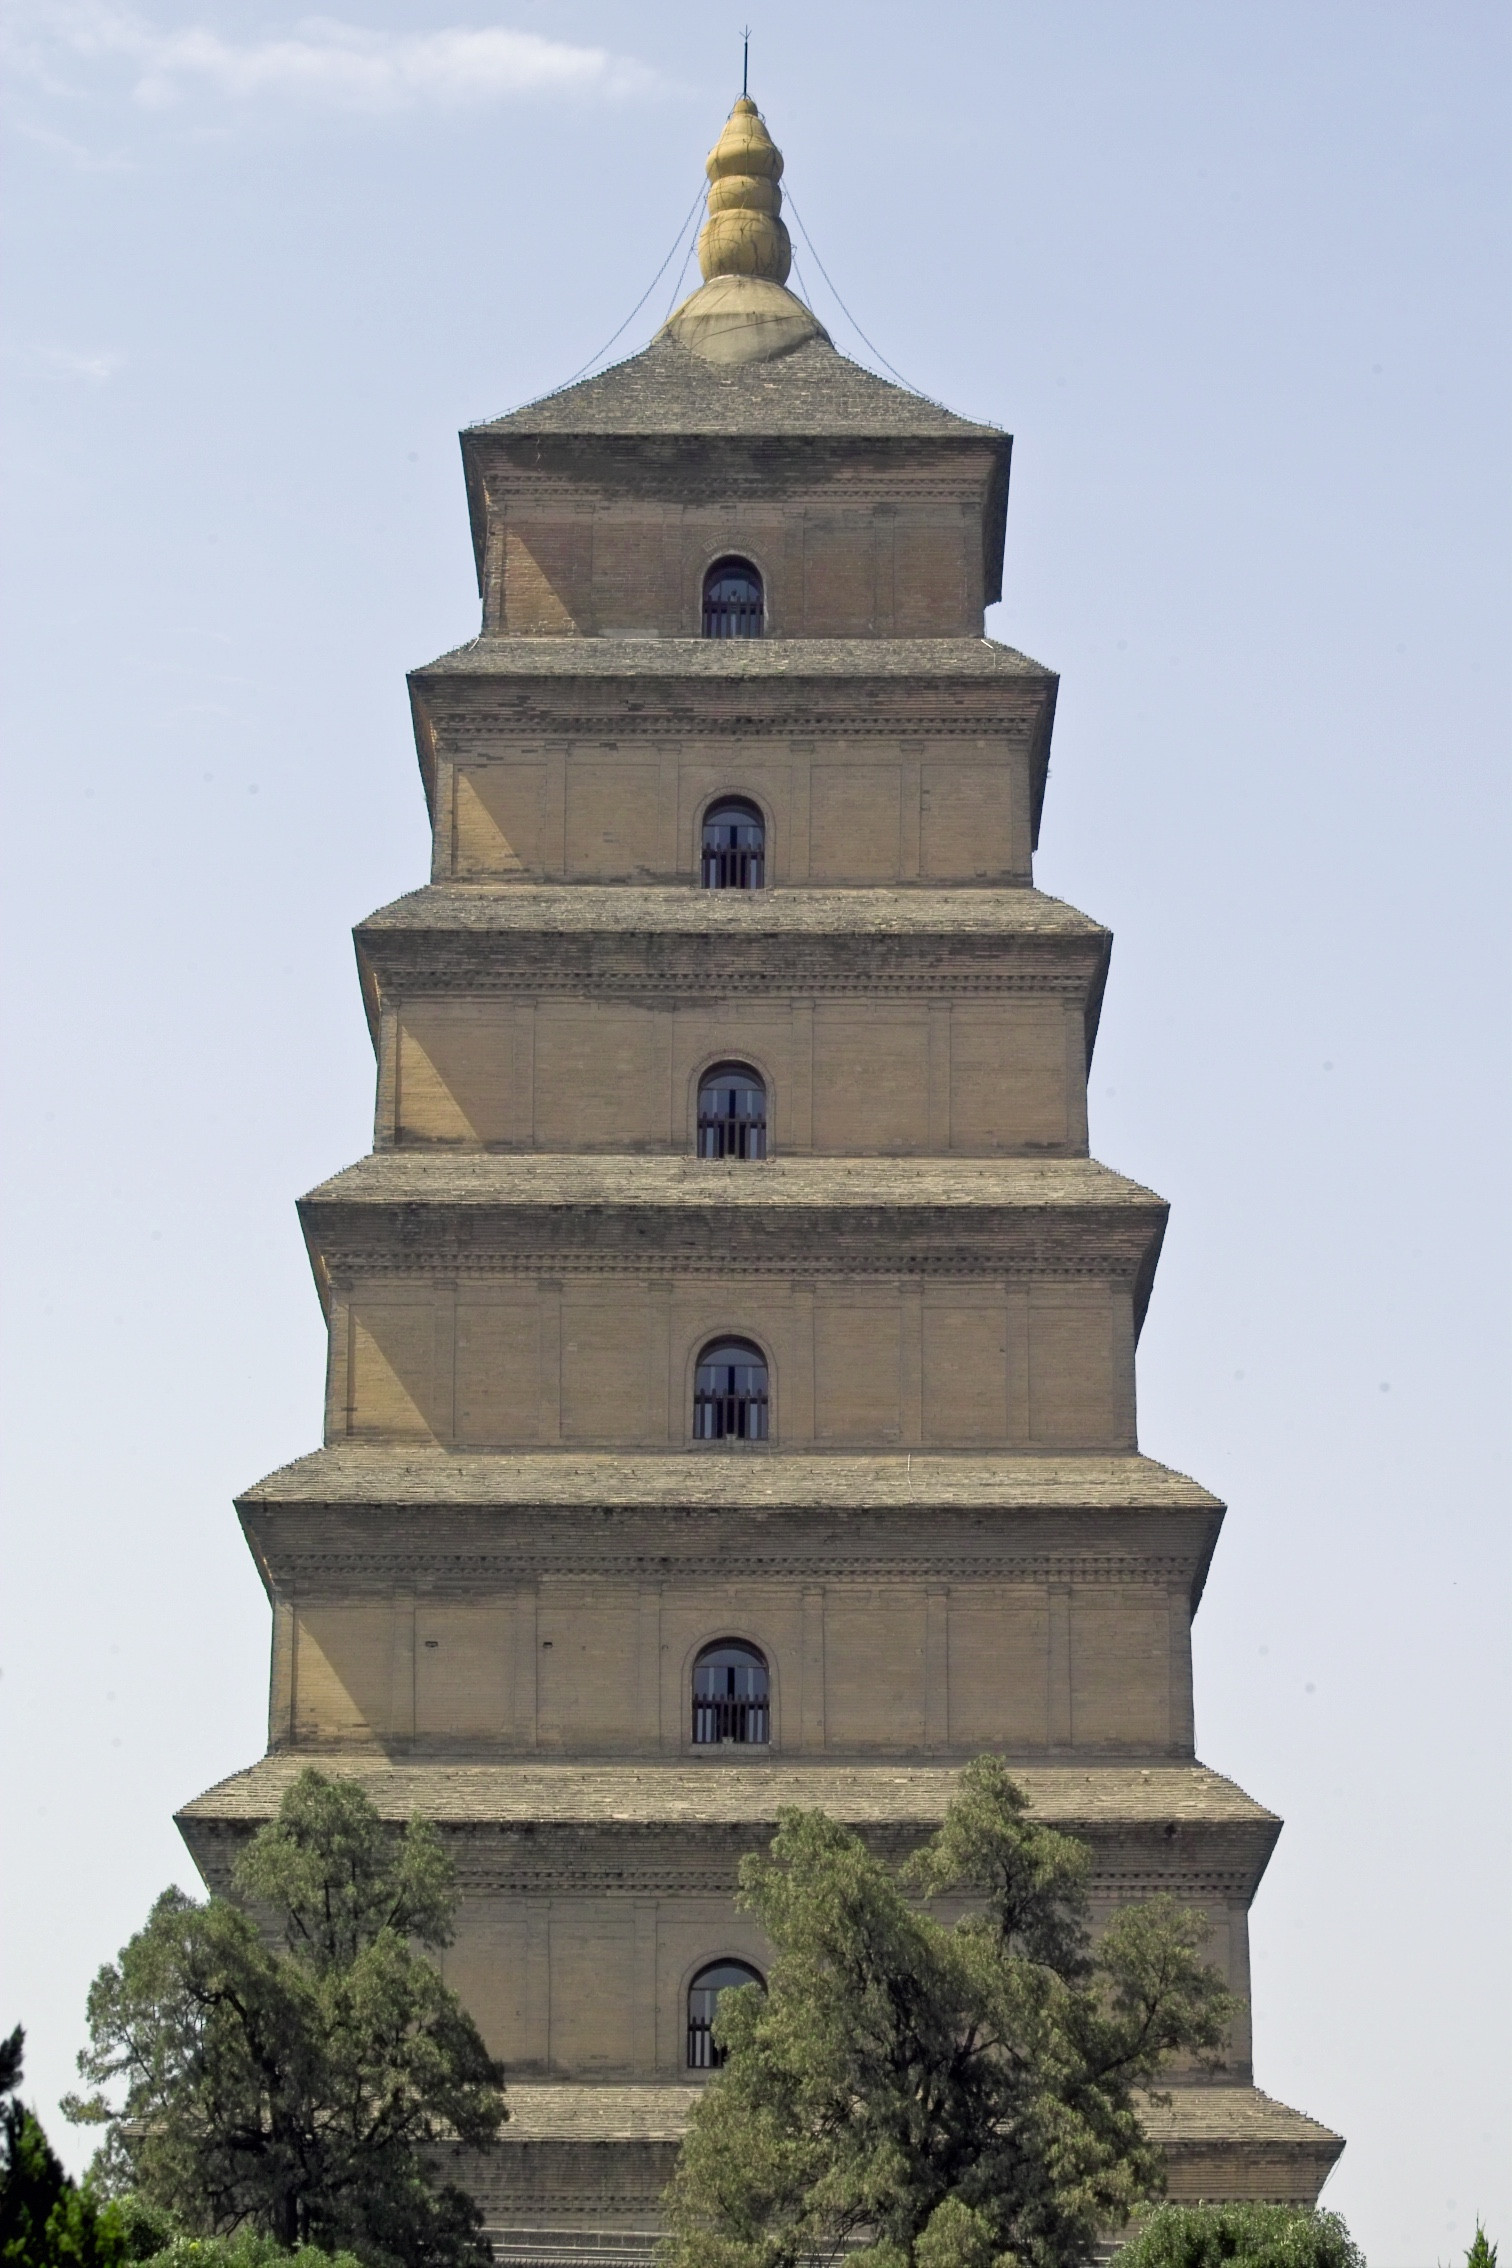 Giant Wild Goose Pagoda, China